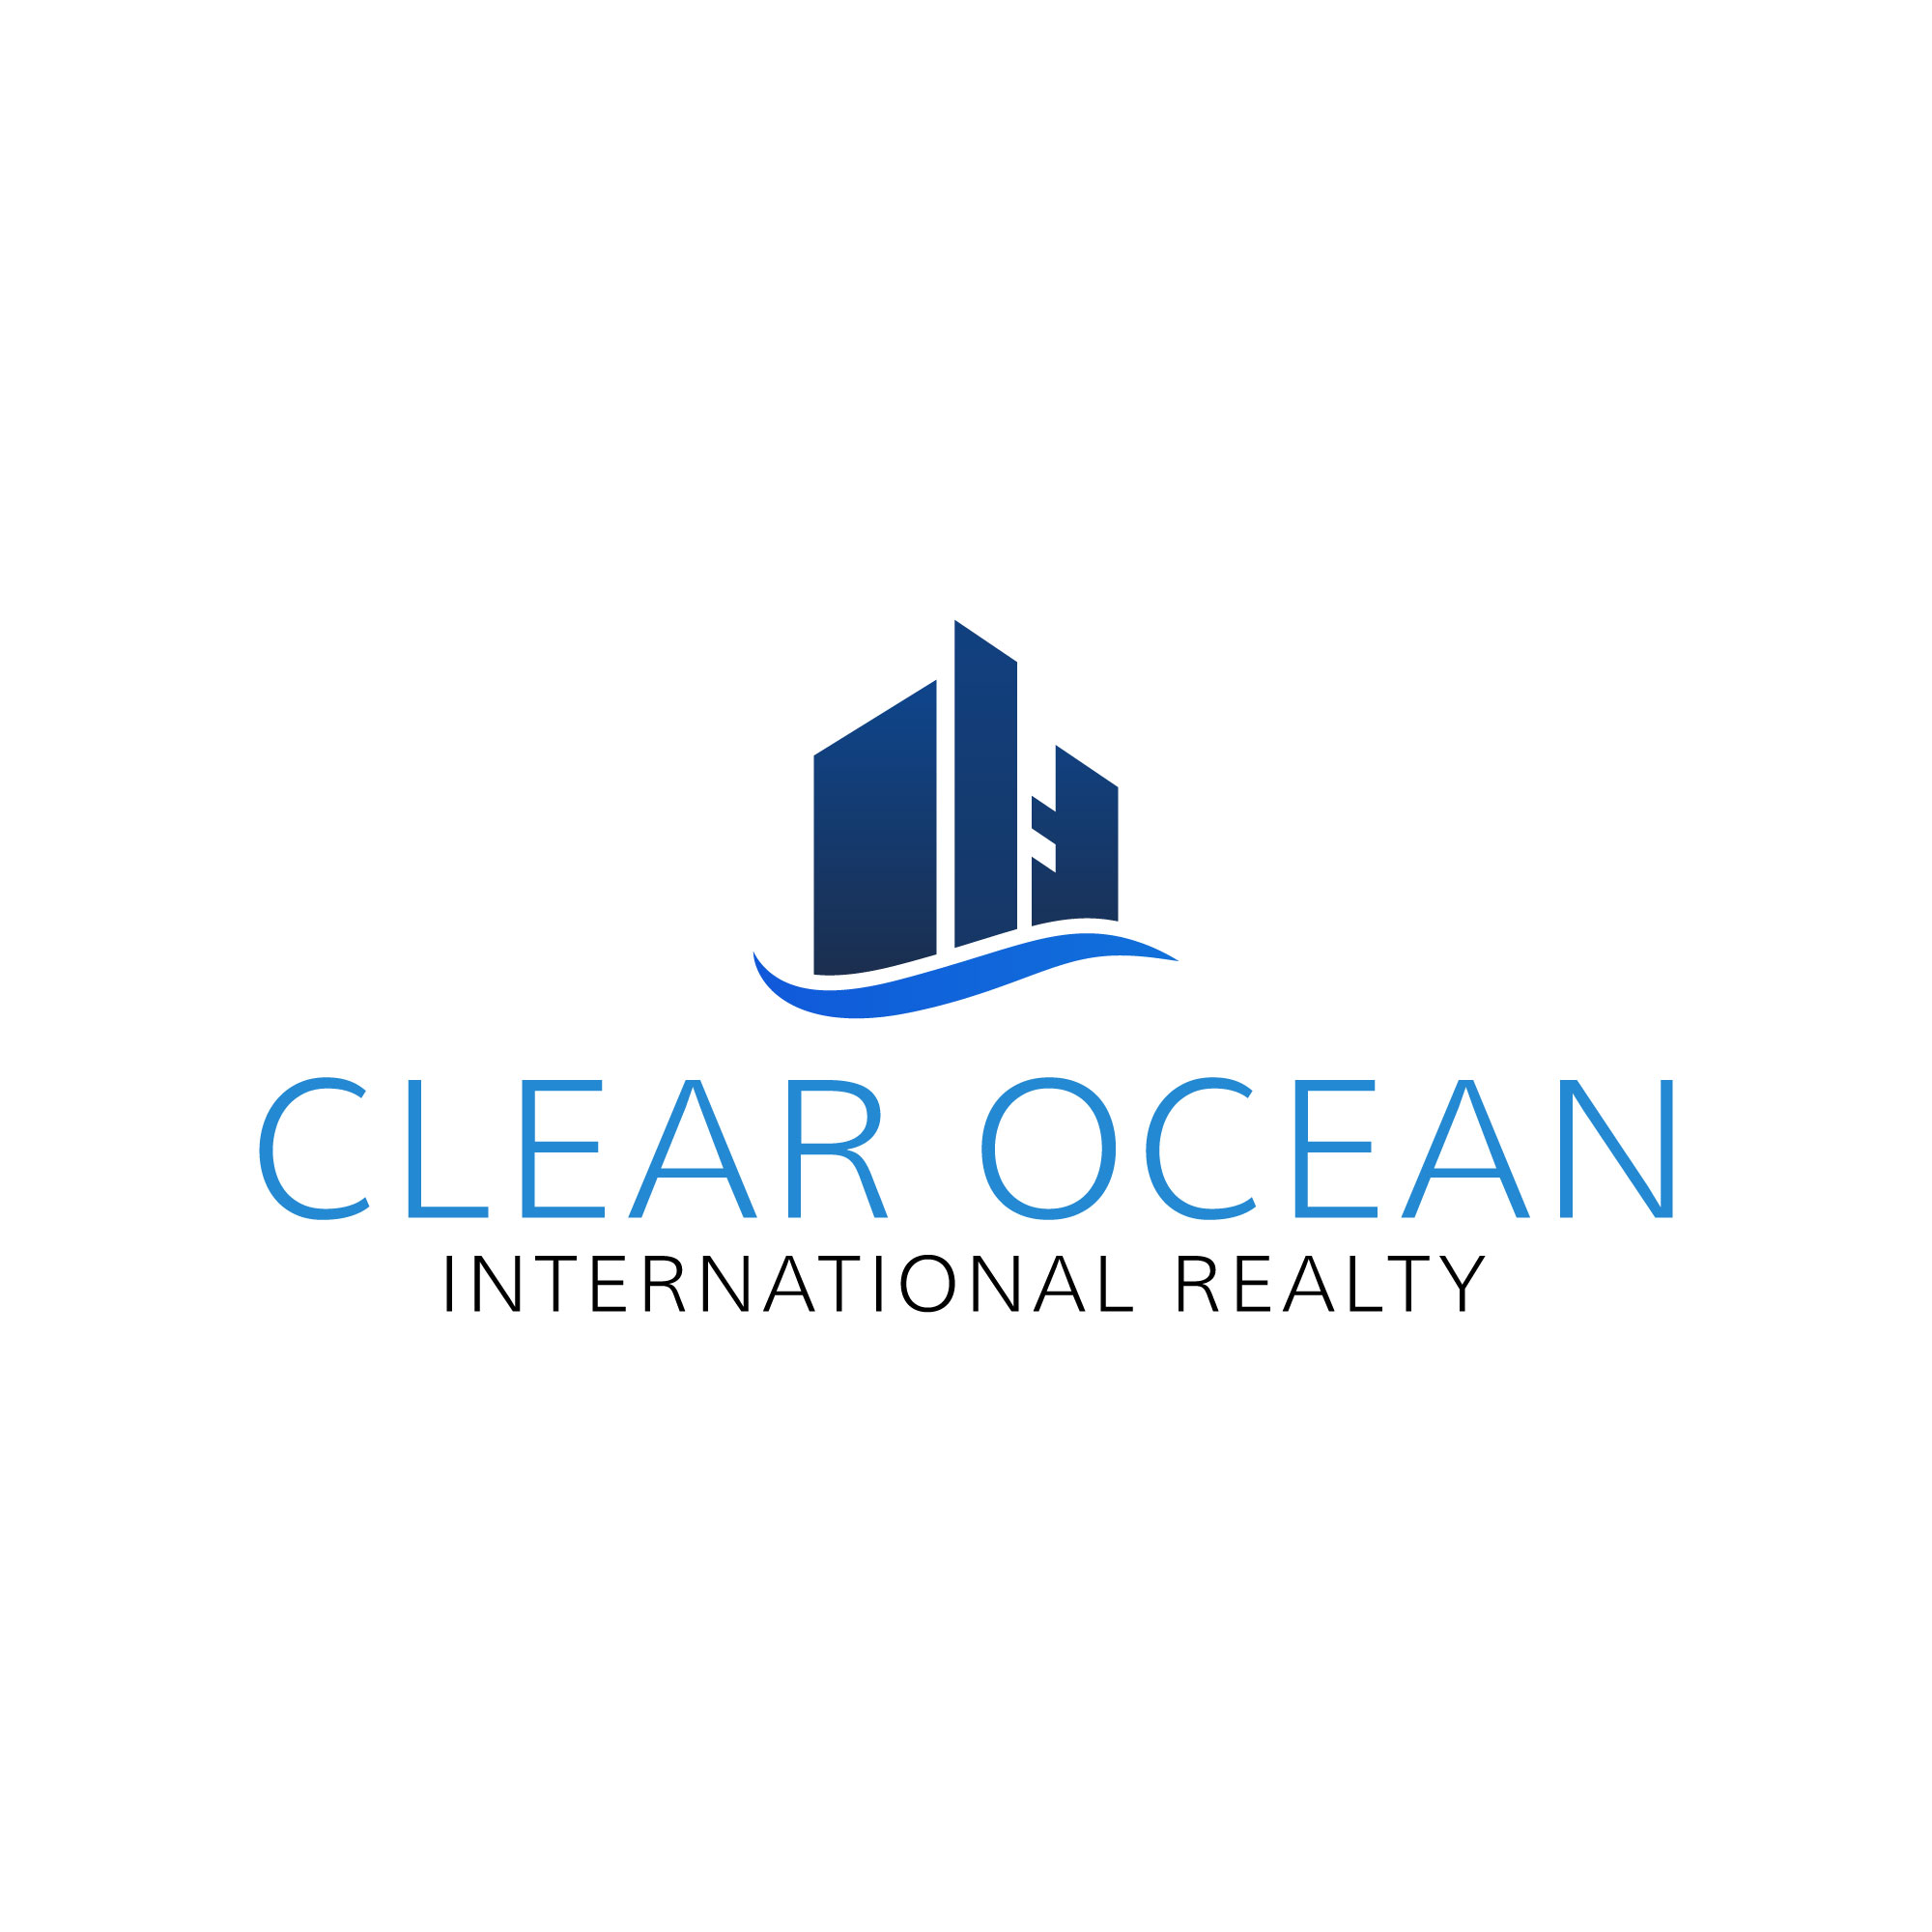 Clear Ocean International Realty